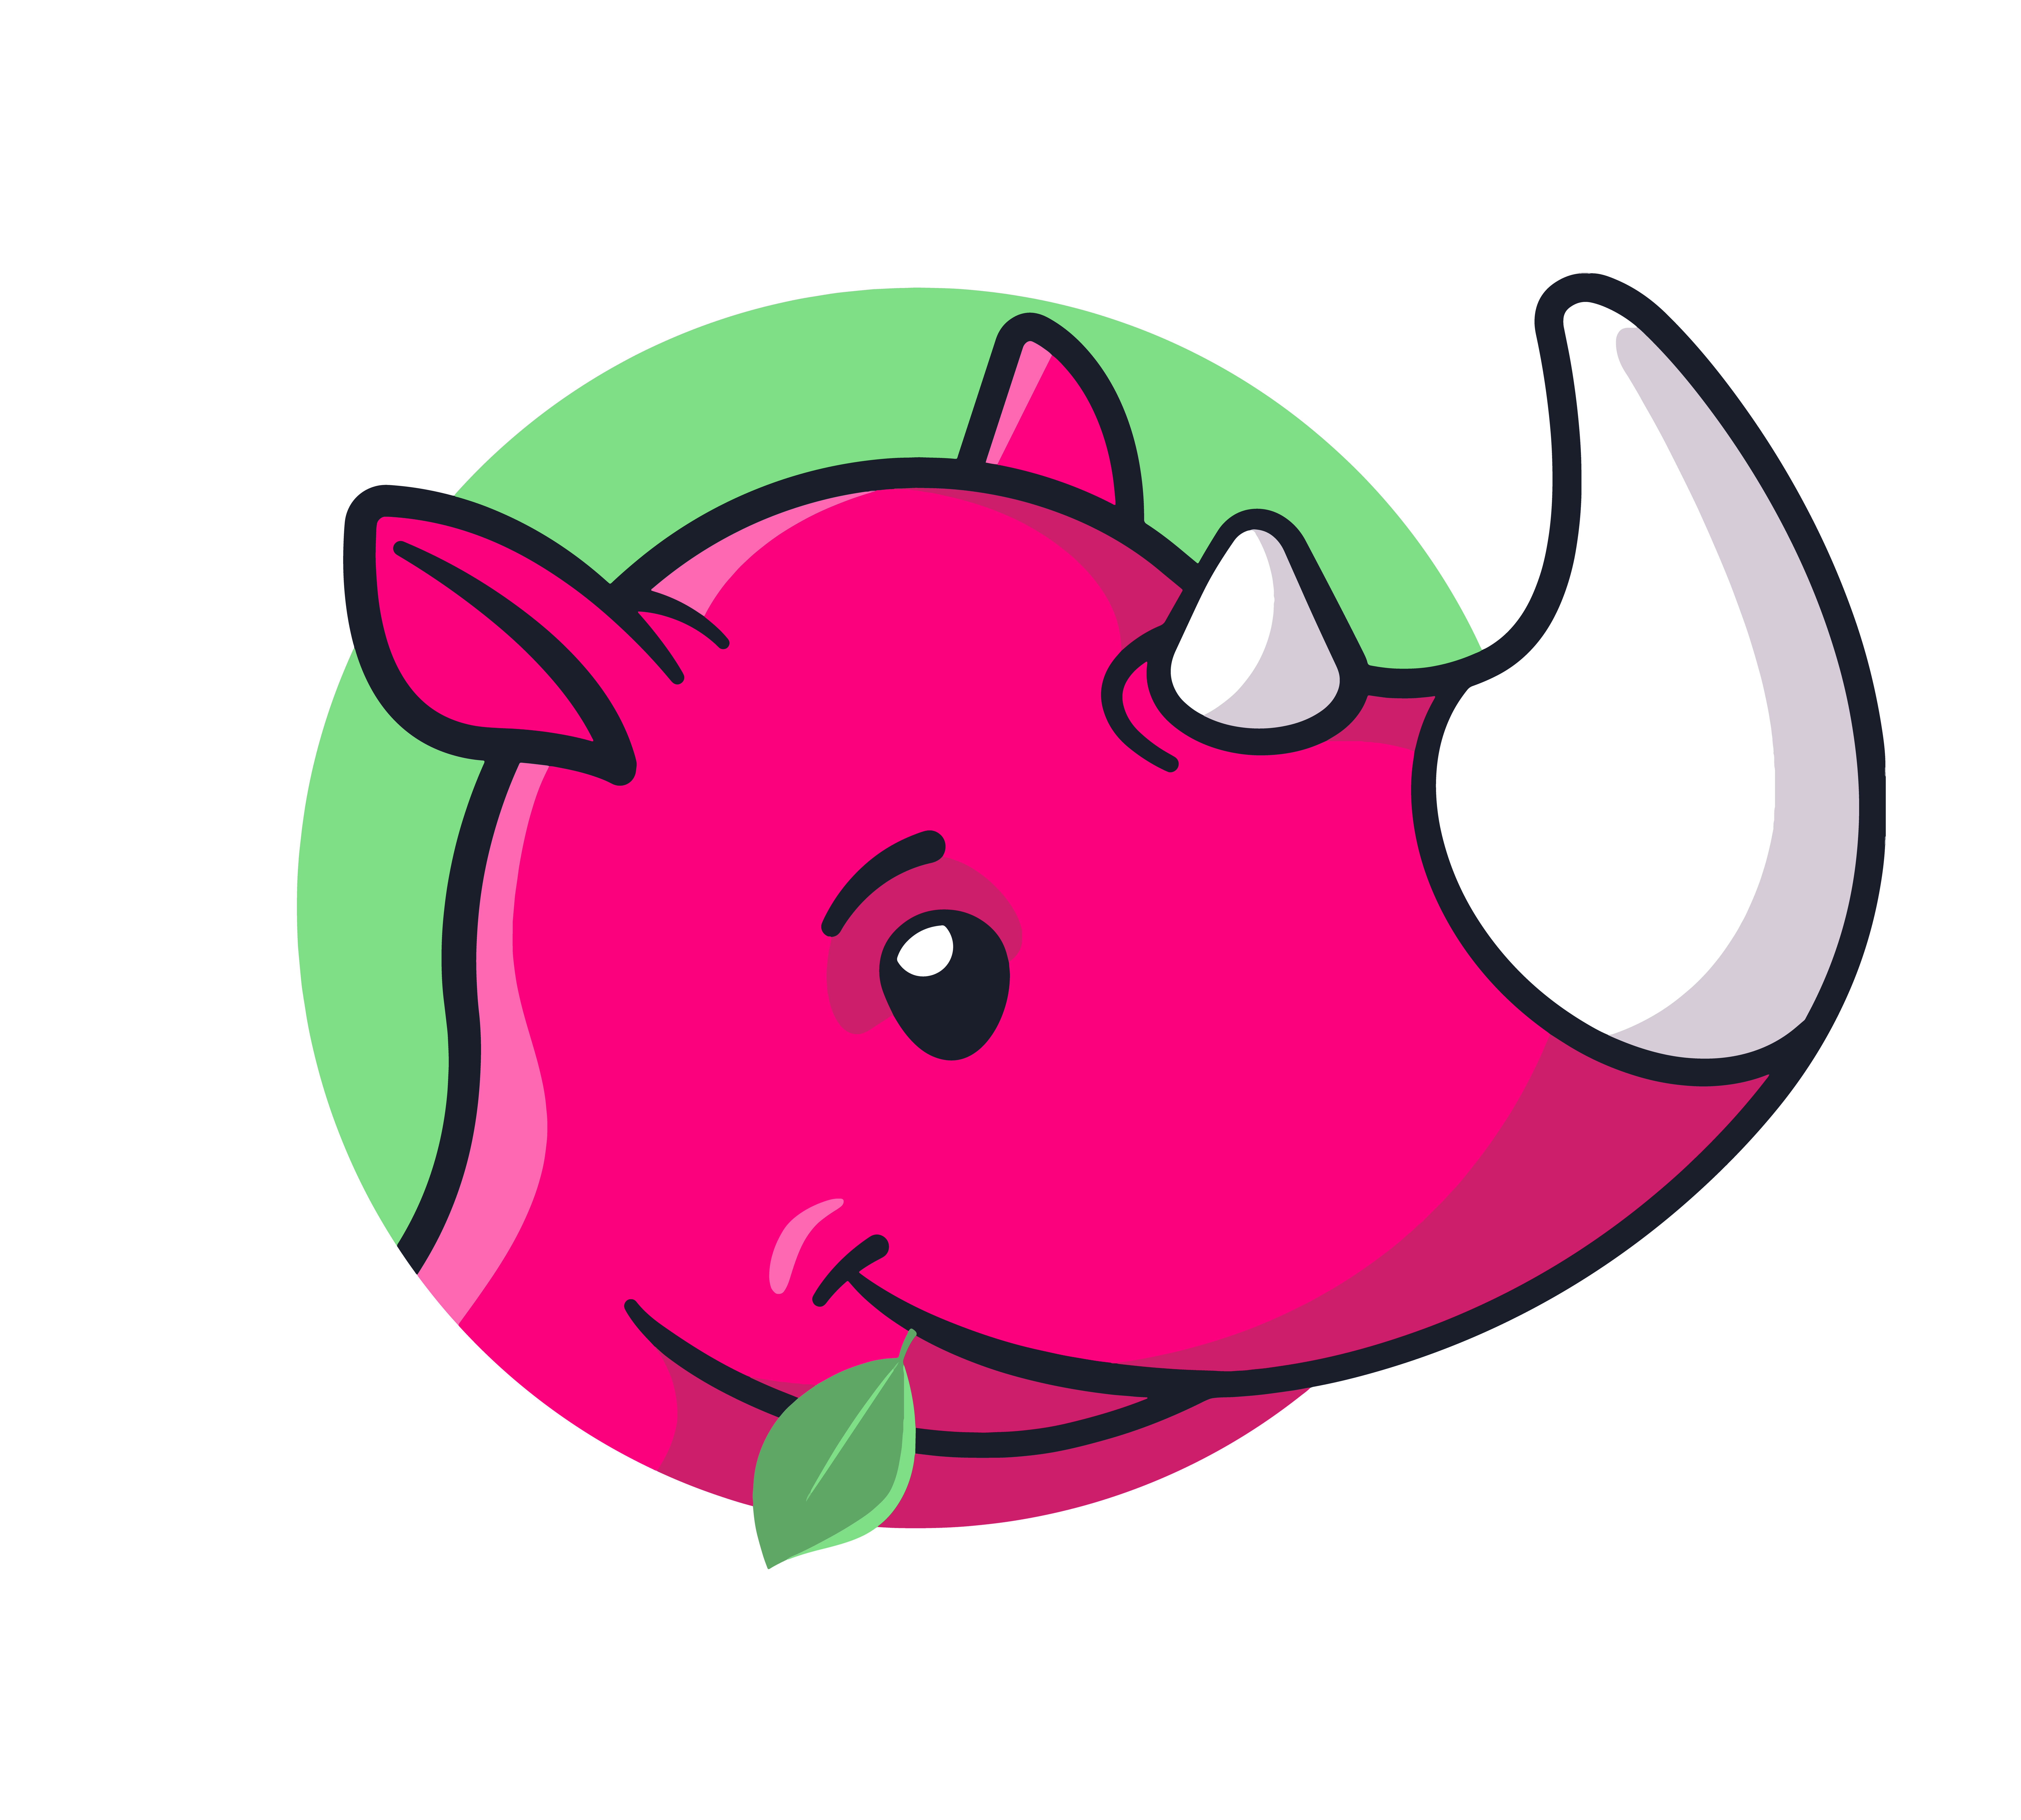 Rhino Eco logo